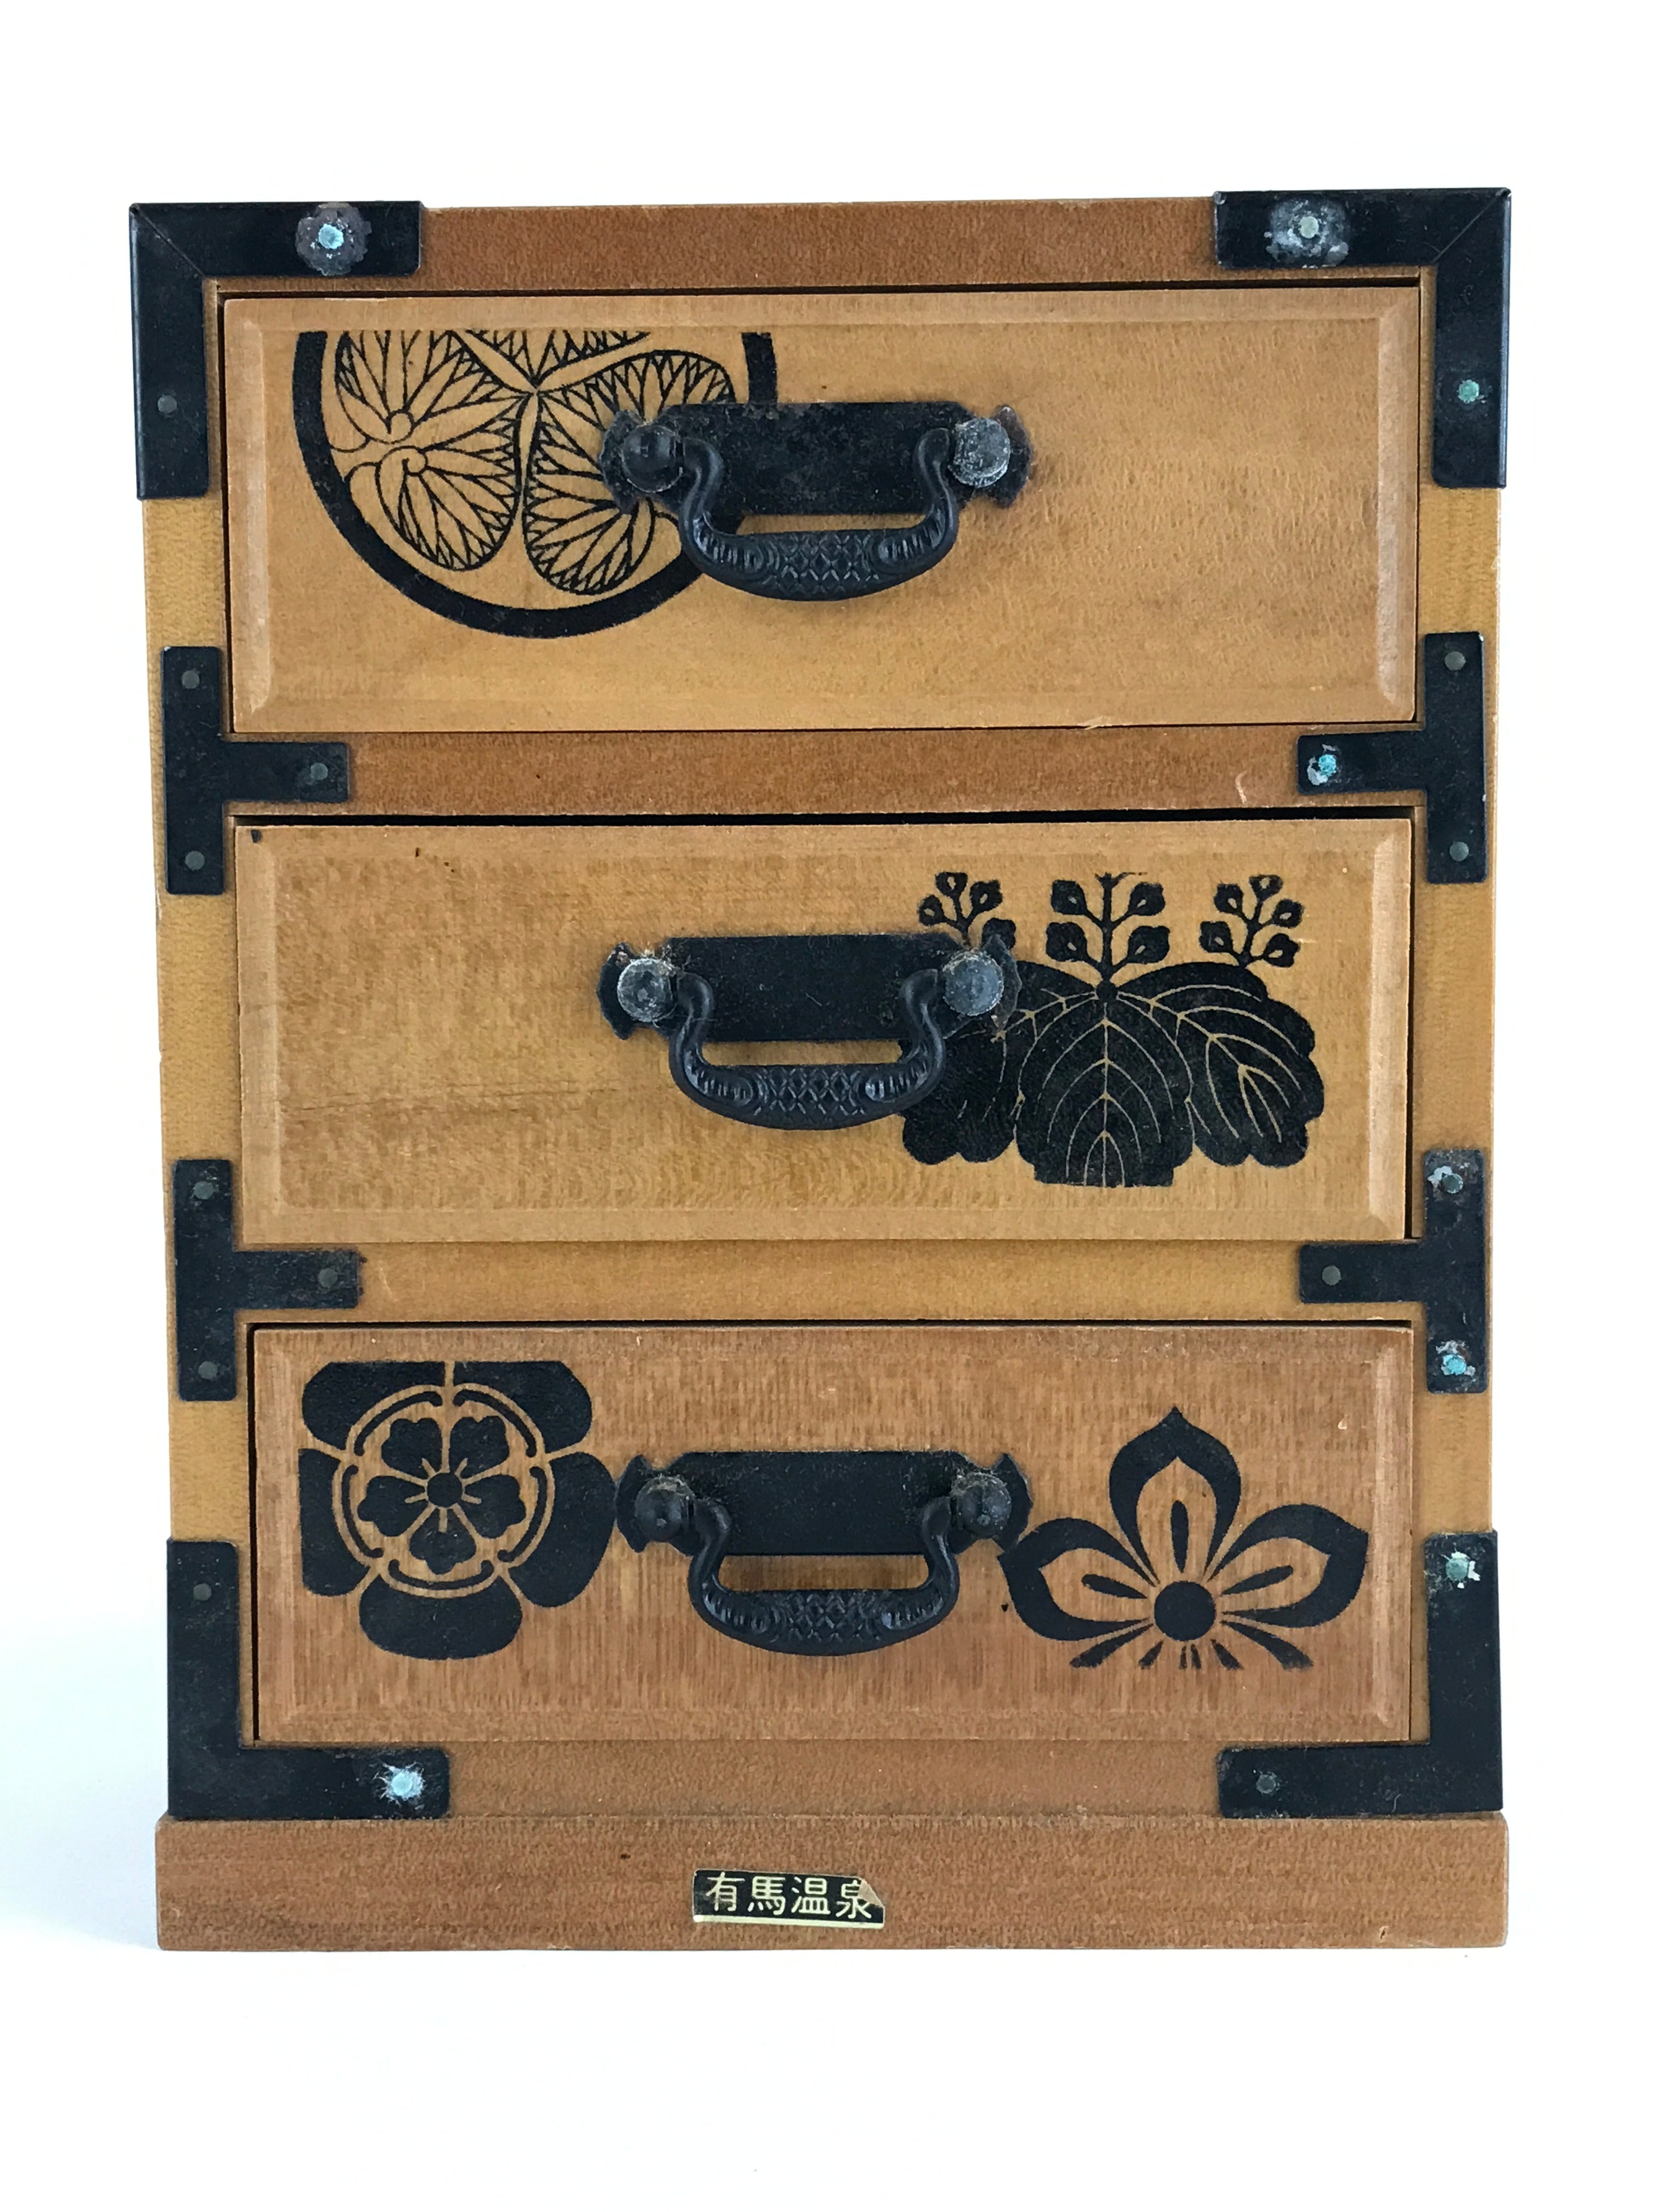 Japanese Wooden Sewing Box Haribako Vtg Tansu Chest 3 Drawers Family Crest T333